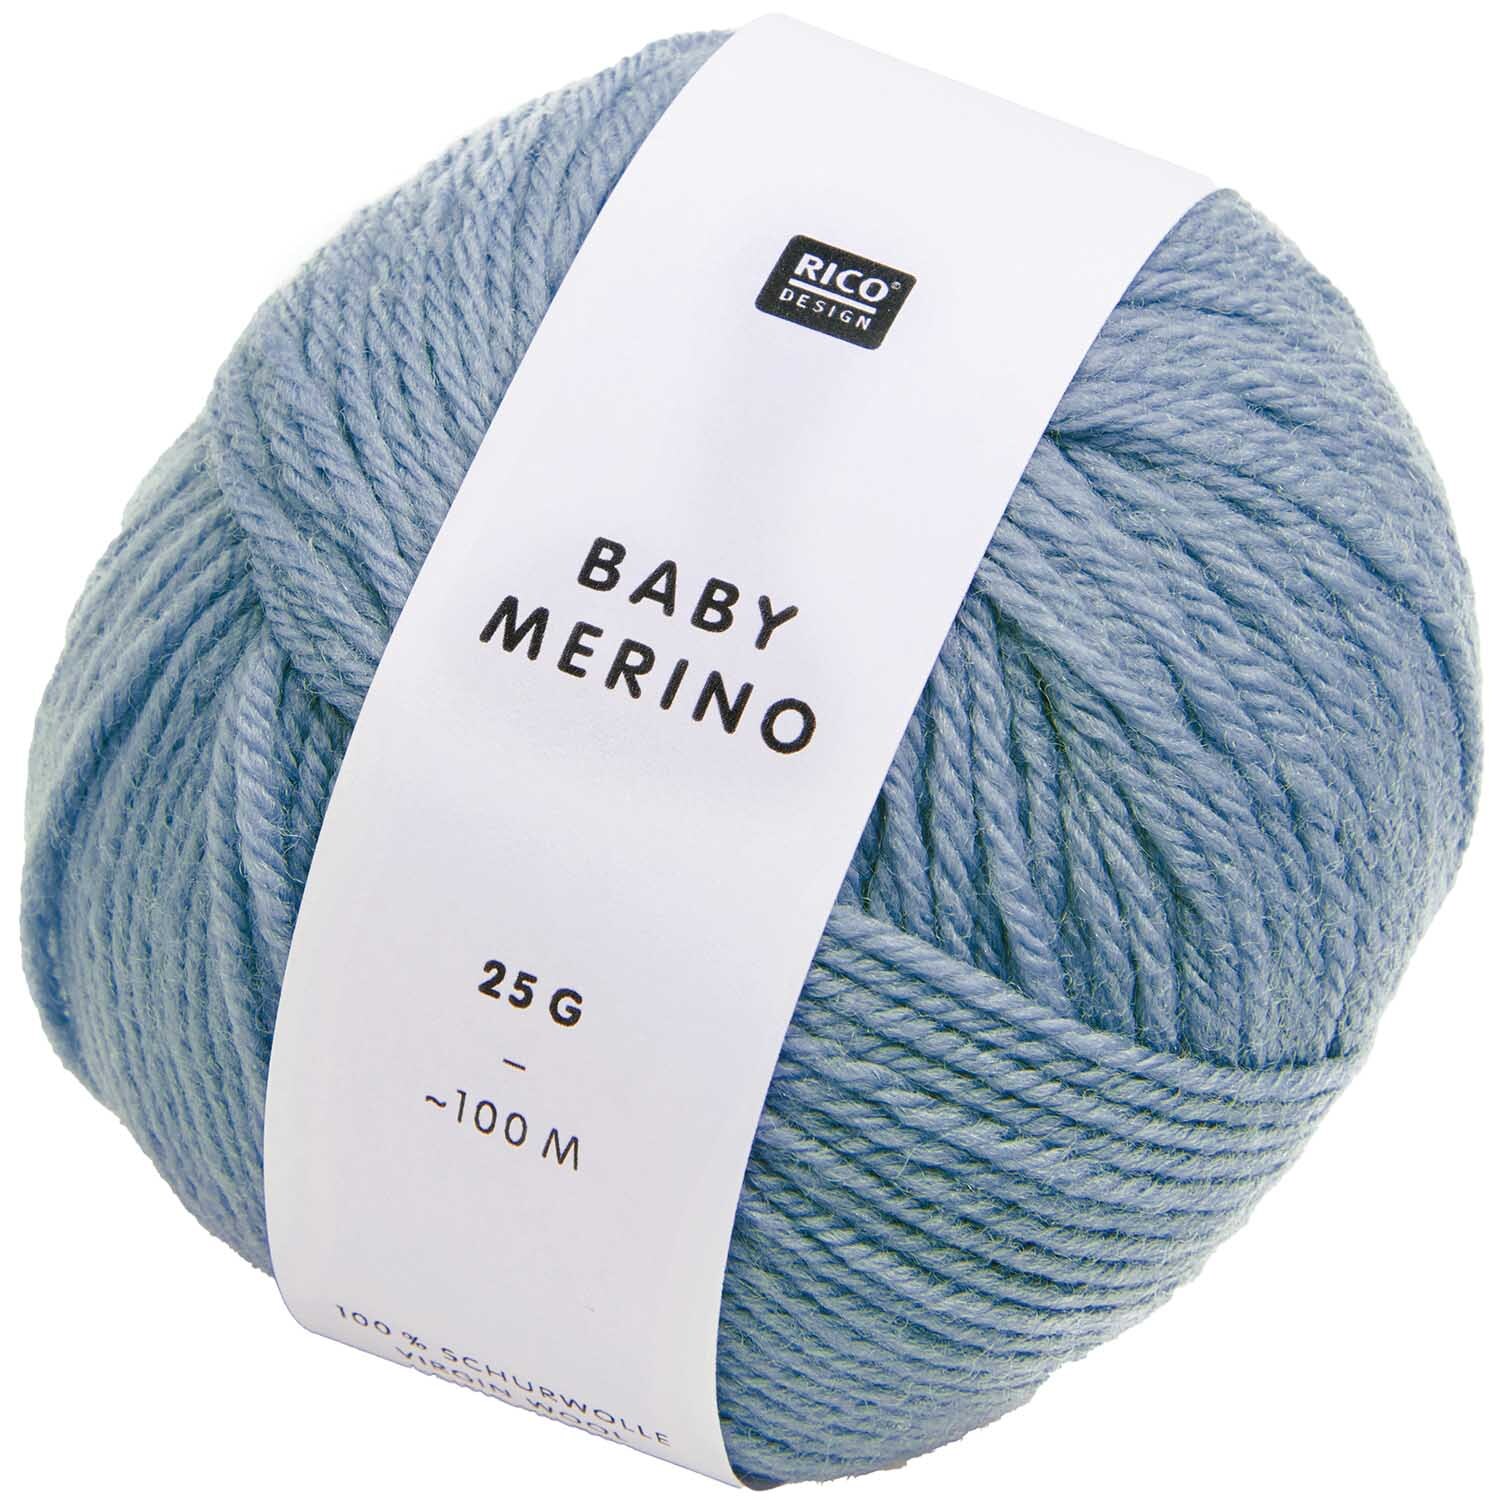 Baby Merino print Rico Design 016 (multicolor) 25 GR 100 M - Laine layette  certifiée OEKO-TEX